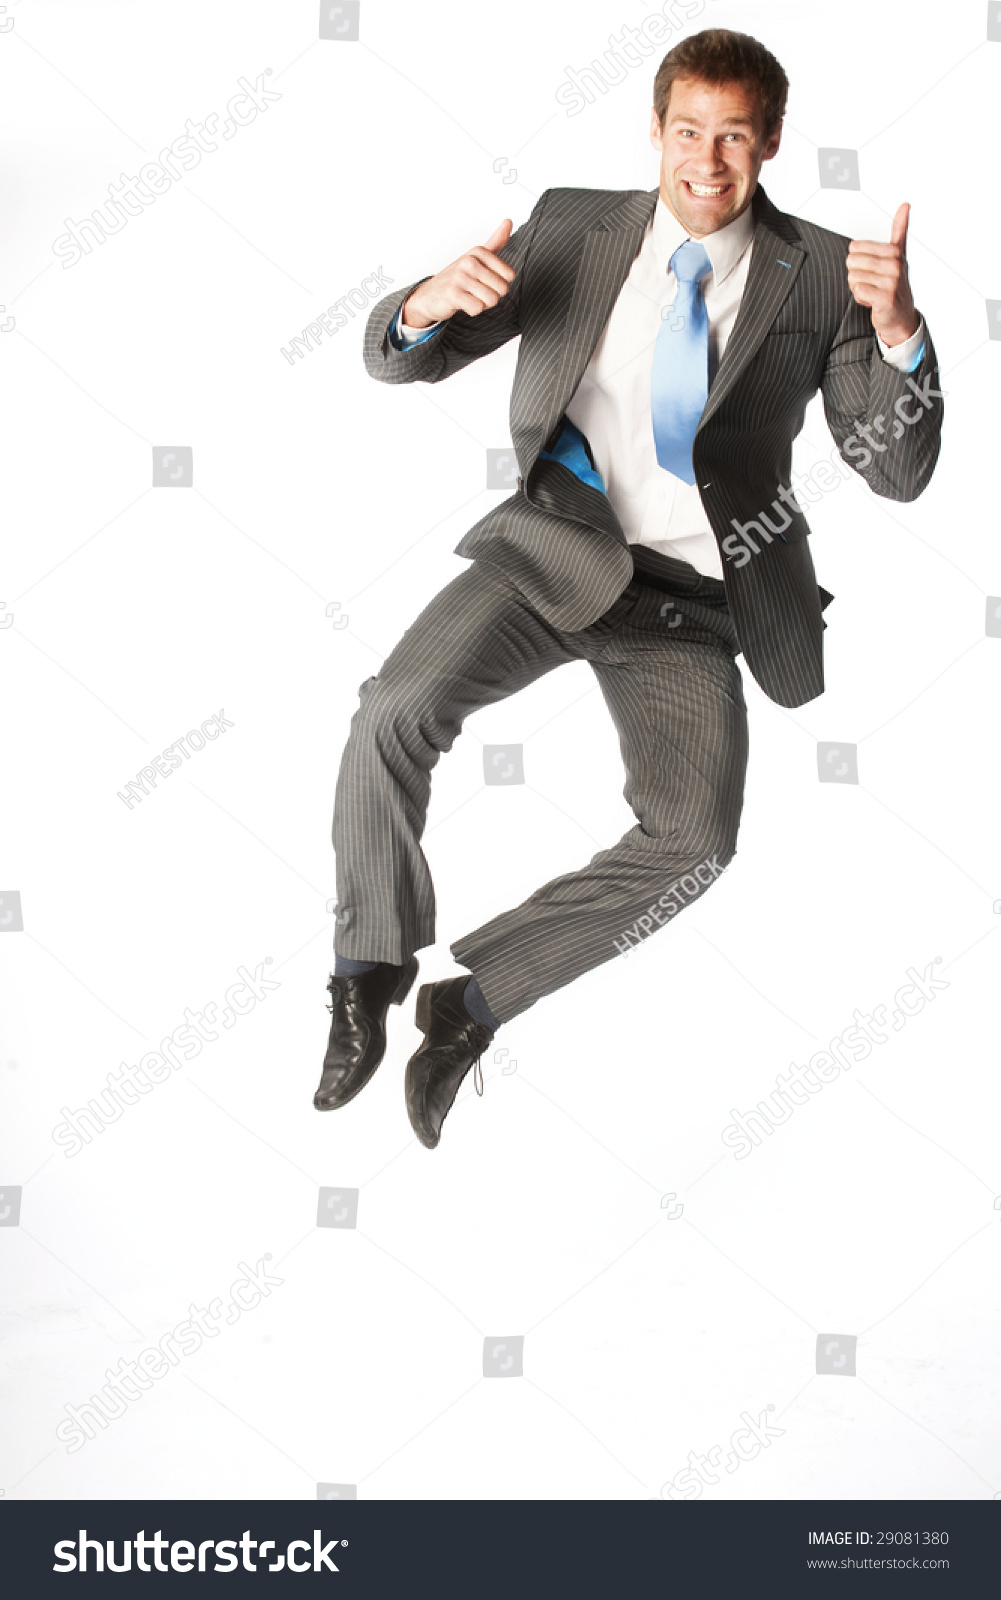 Successful Business Man Jump Stock Photo 29081380 : Shutterstock